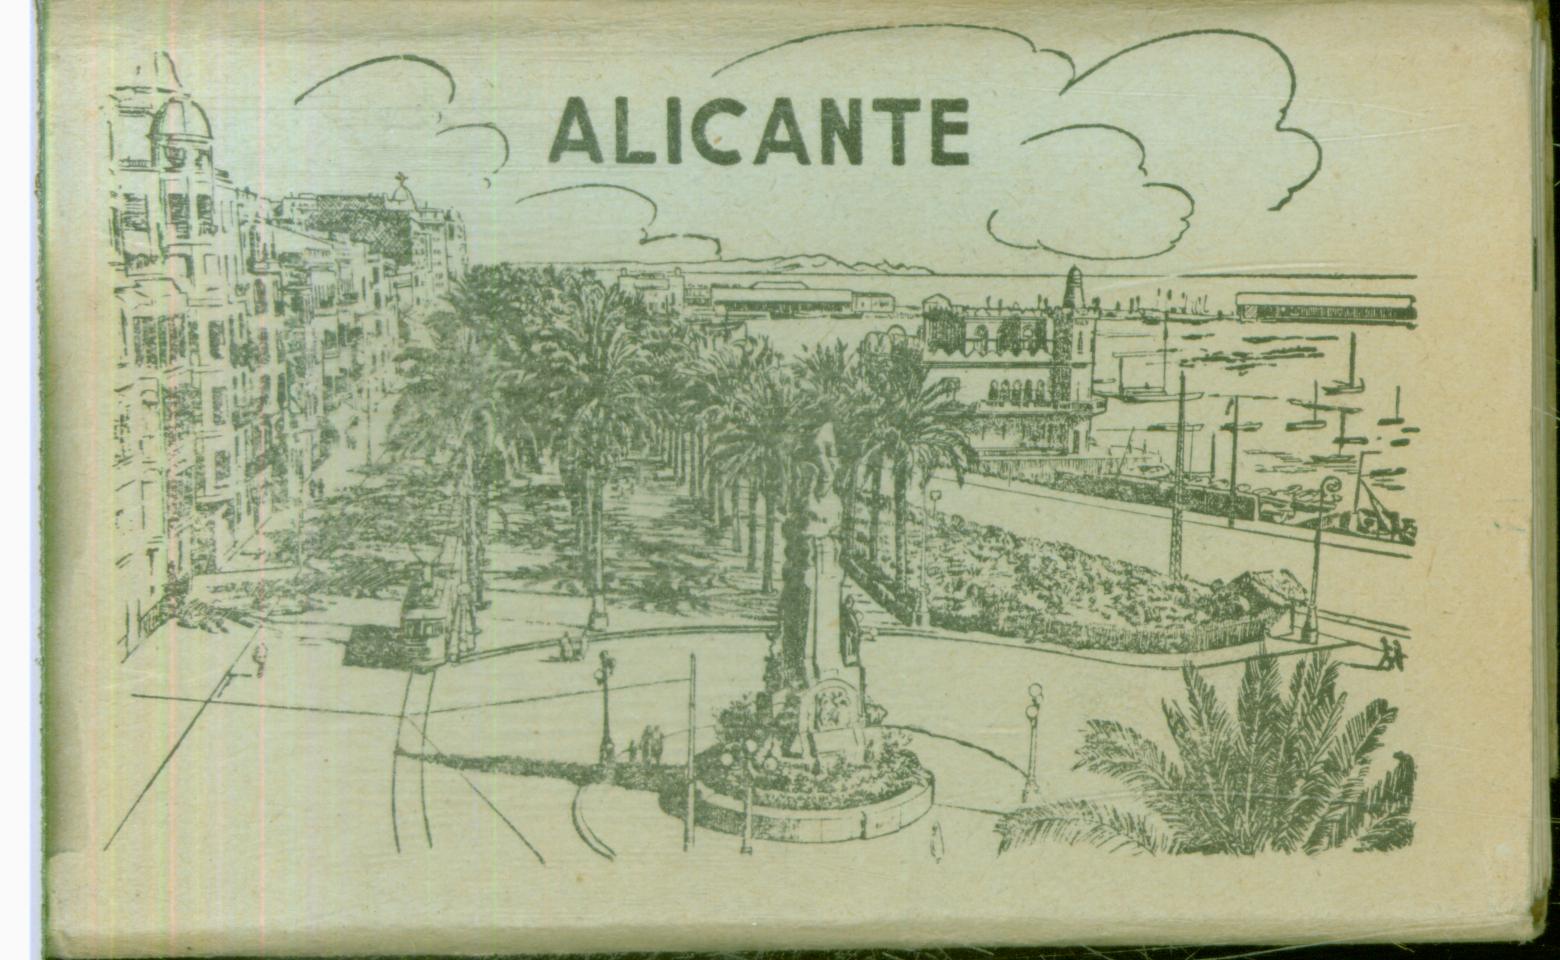 Cartes postales anciennes > CARTES POSTALES > carte postale ancienne > cartes-postales-ancienne.com Lots cartes postales Espagne